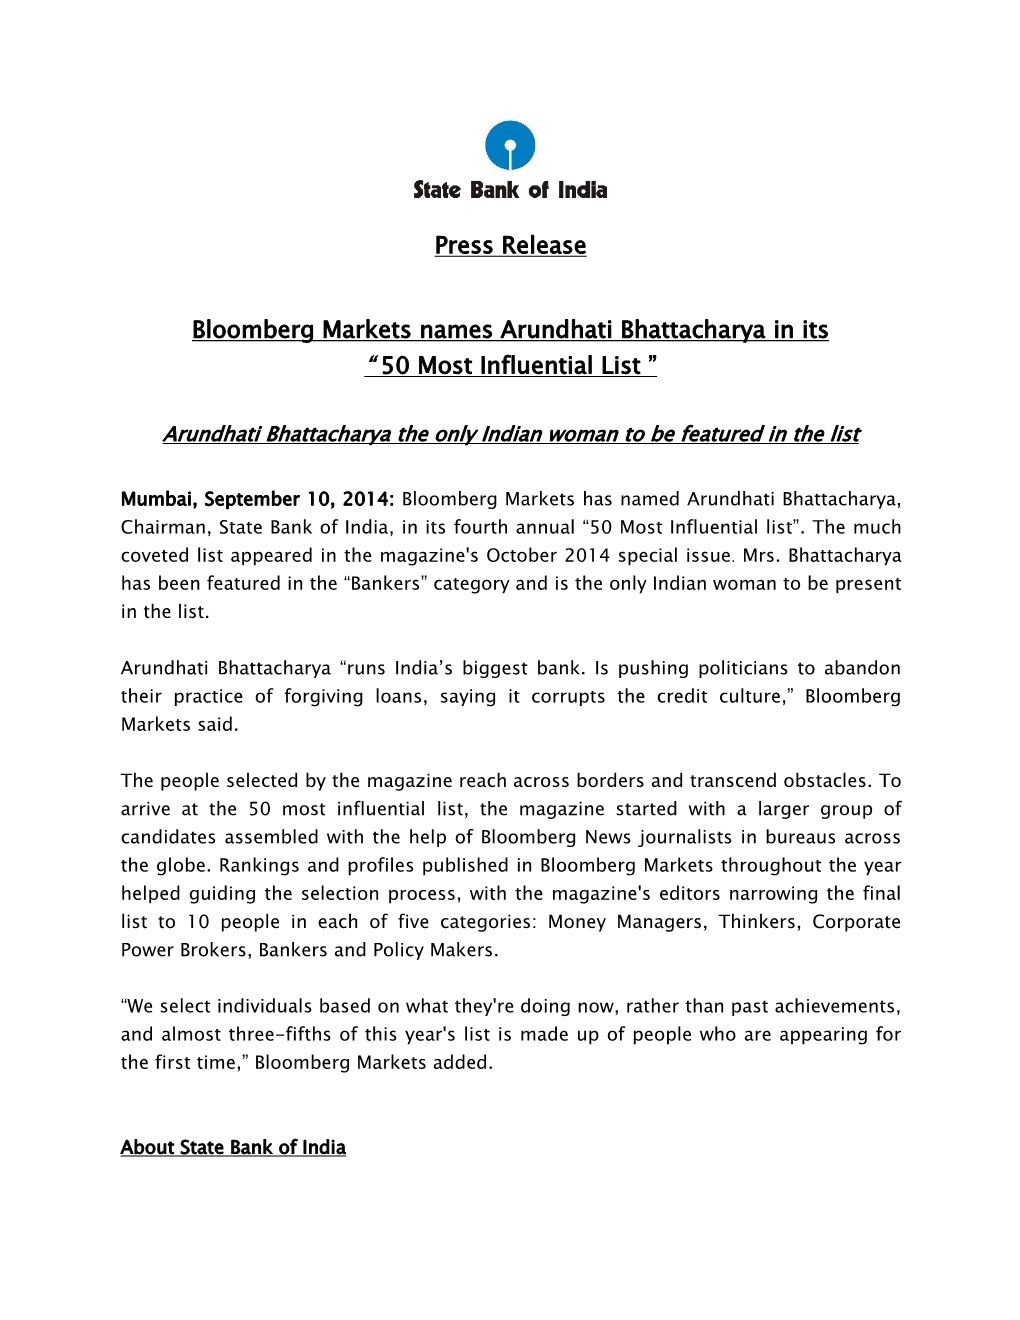 Press Release Bloomberg Markets Names Arundhati Bhattacharya In